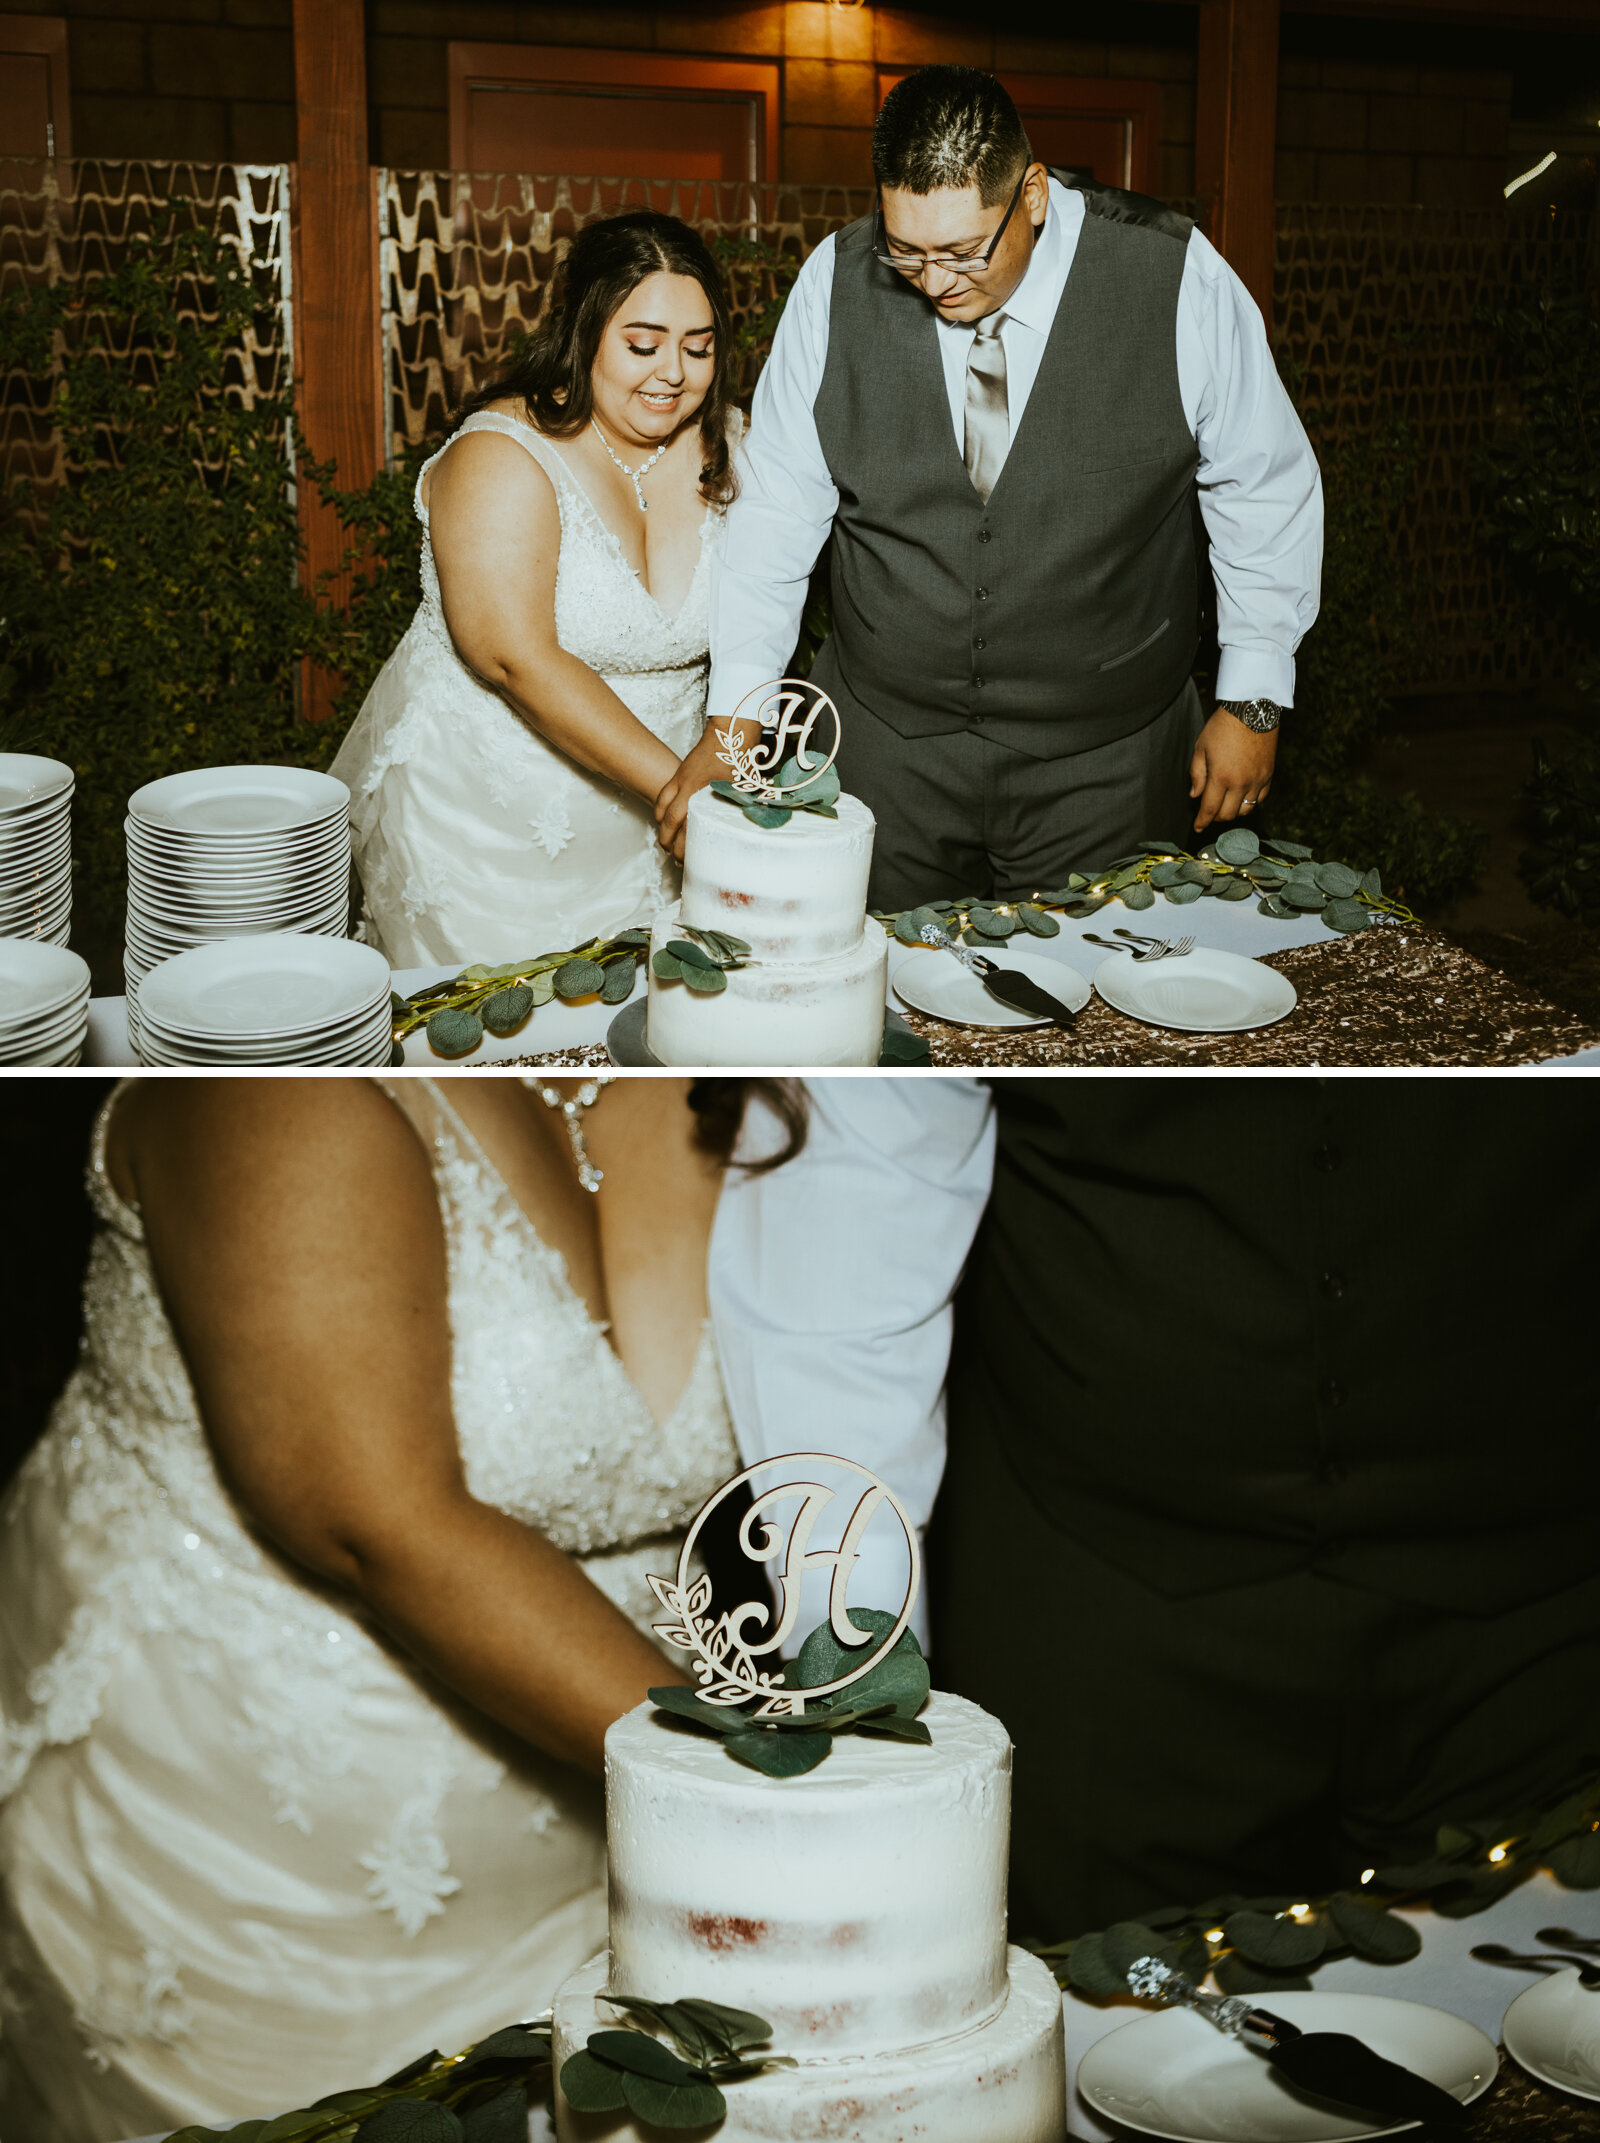 GRAND HIGHLAND HOTEL PRESCOTT ARIZONA WEDDING PHOTOGRAPHY CAKE CUTTING.jpg